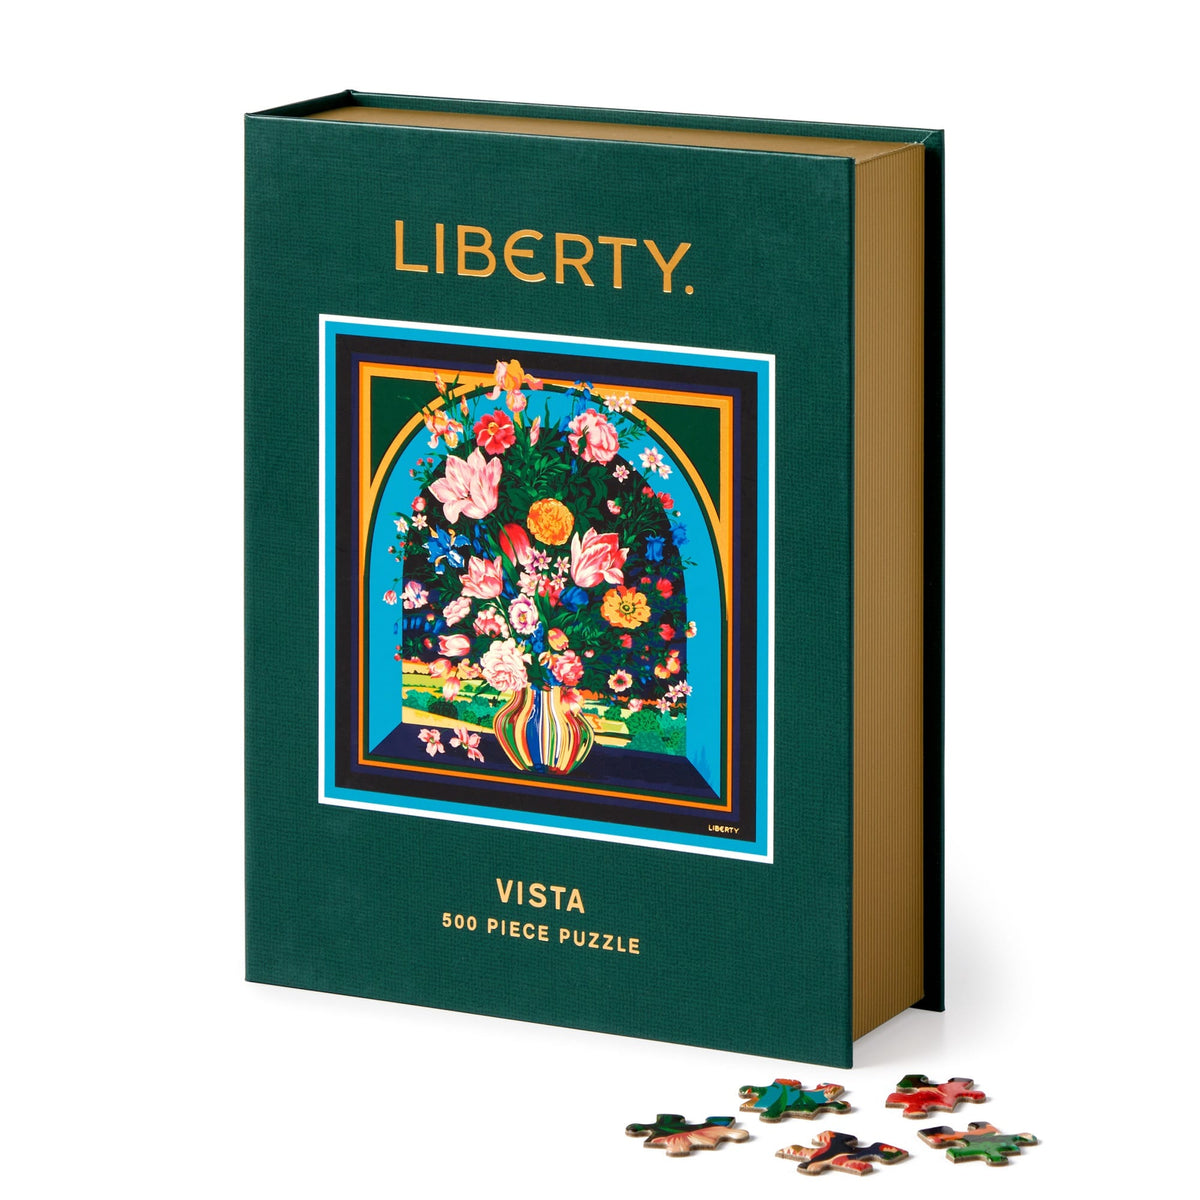 Liberty "Vista" 500 Piece Book Puzzle